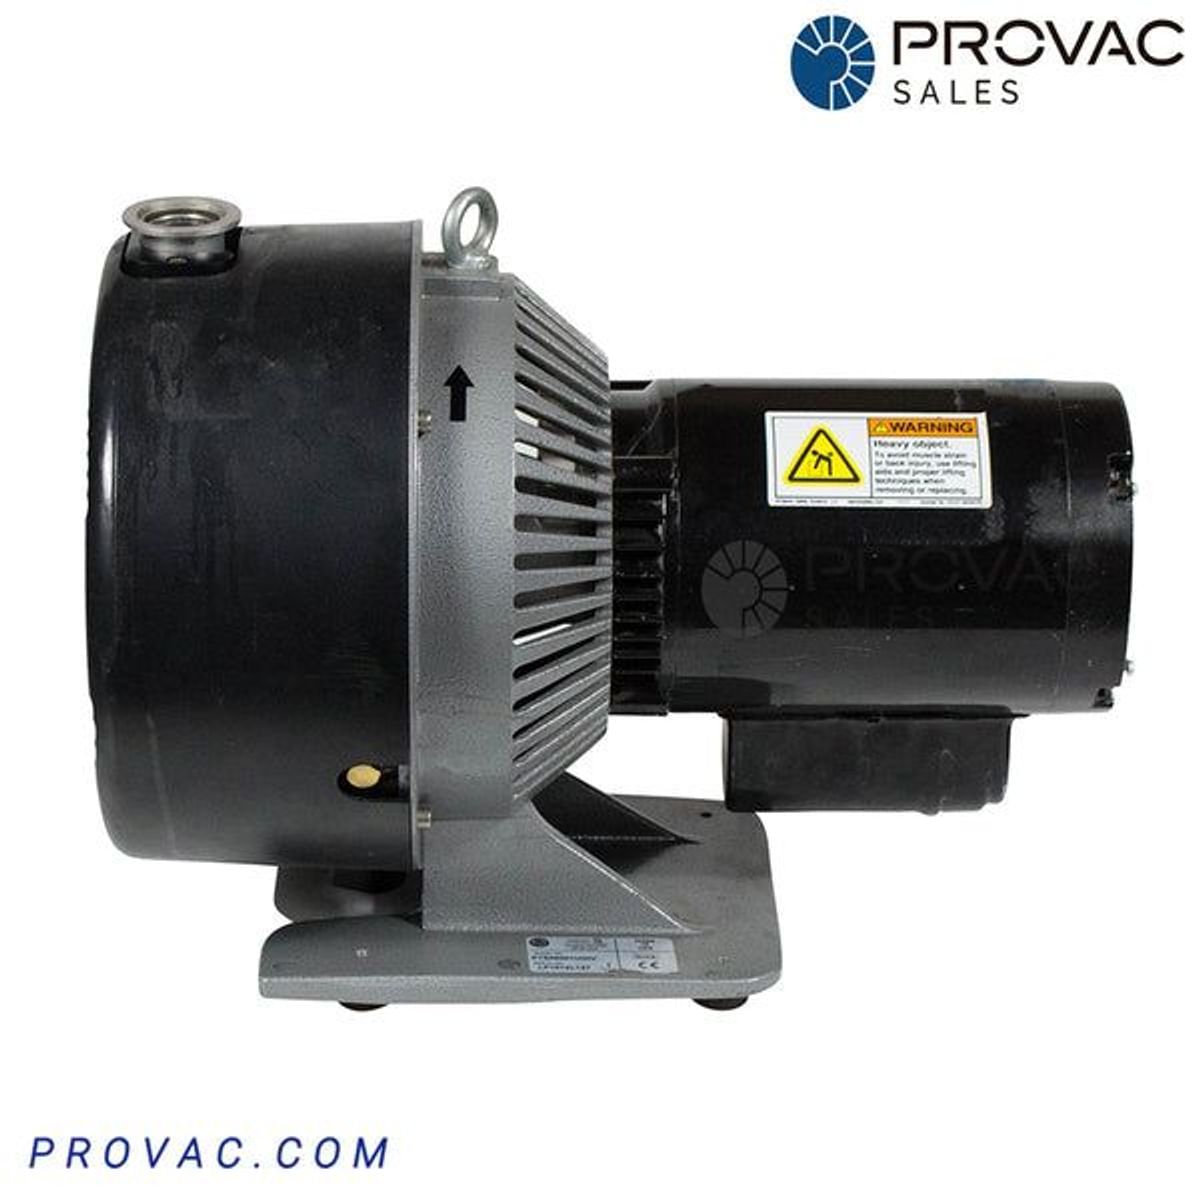 Varian PTS-600 Dry Scroll Pump, 3 Phase, Rebuilt Image 1